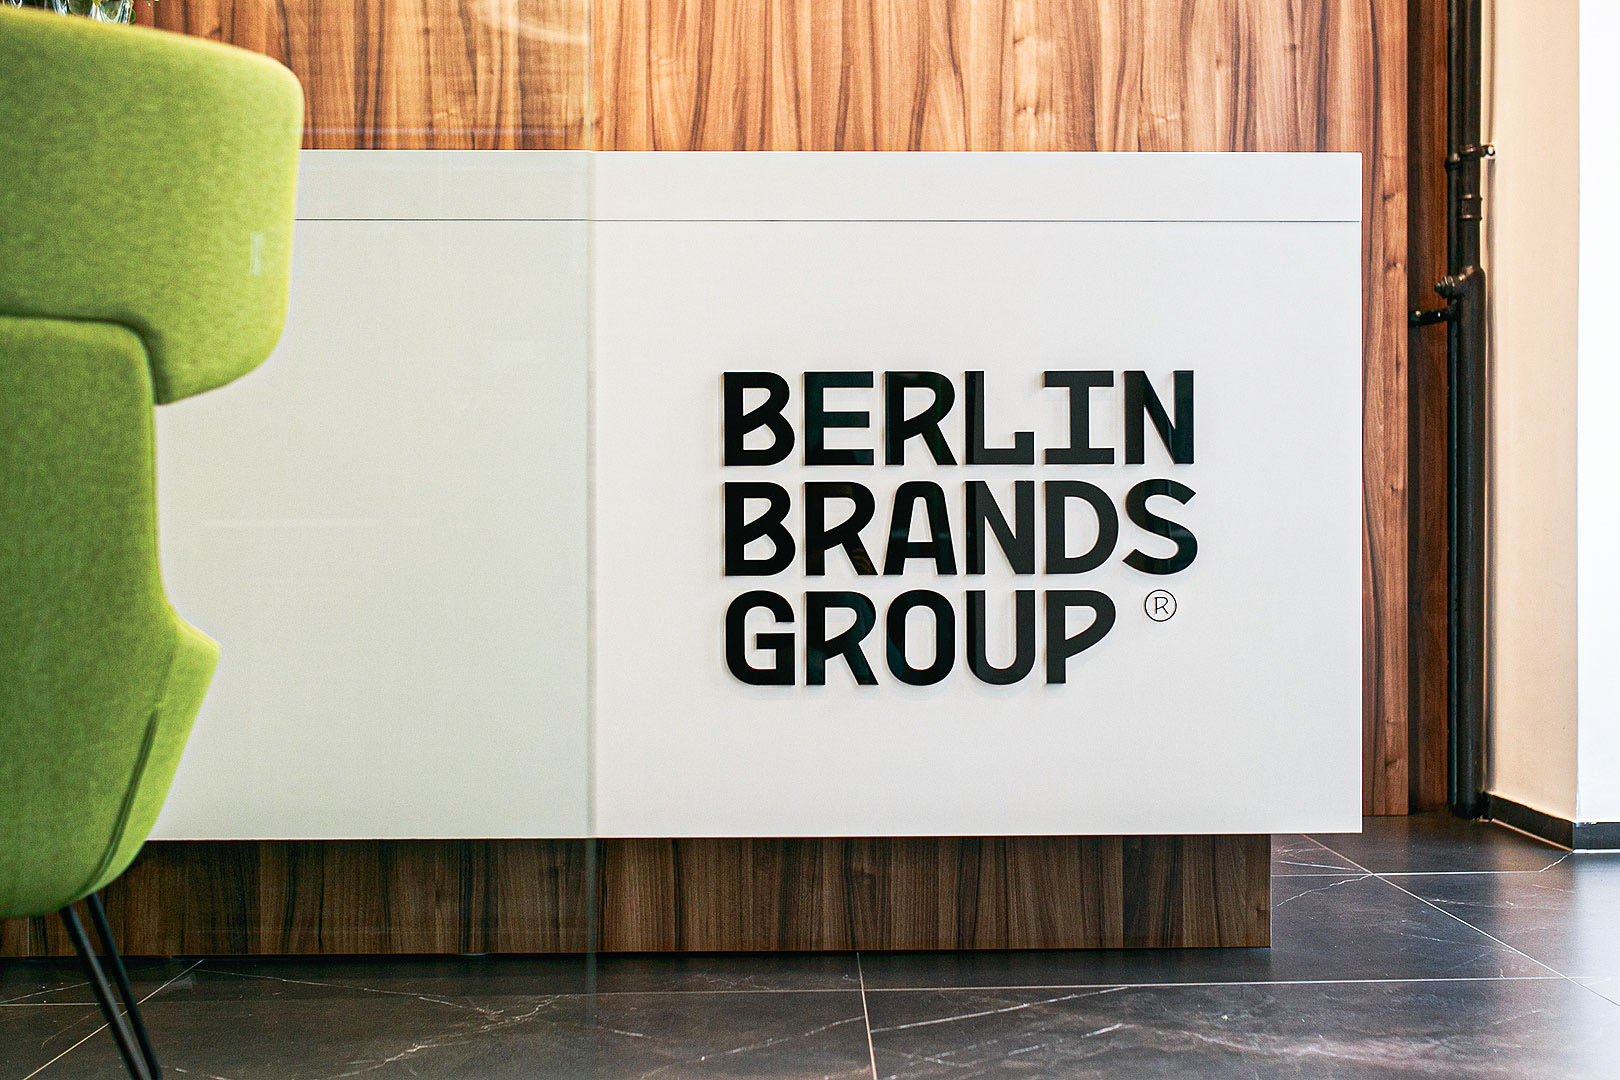 Berlin Brands Group raises 700 million USD led by Bain Capital at unicorn valuation